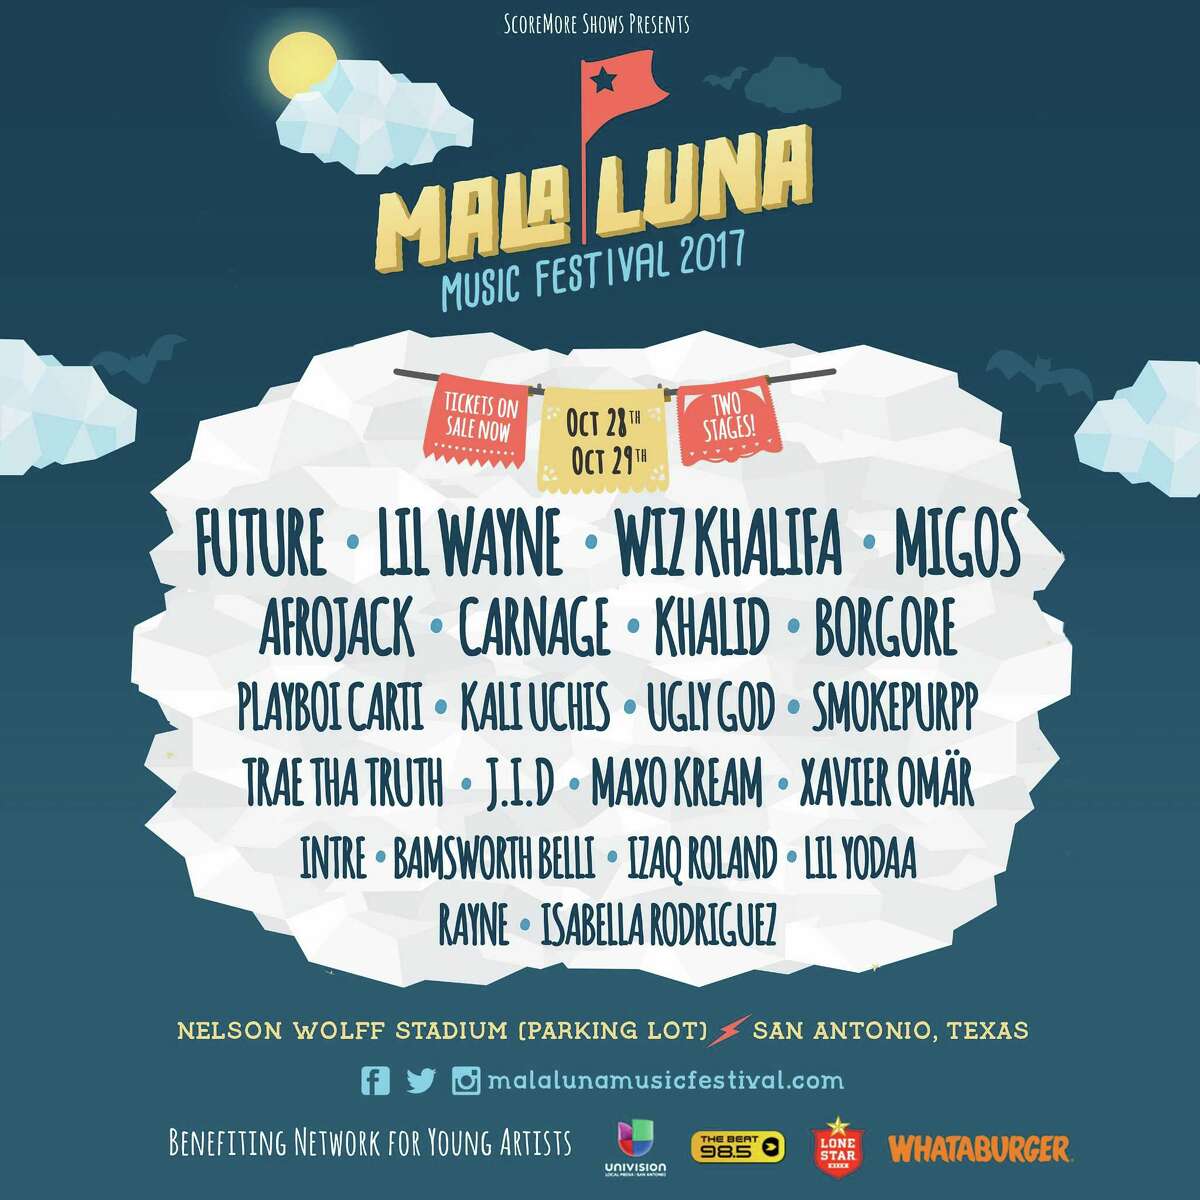 Mala Luna Music Festival announces set times, food vendors